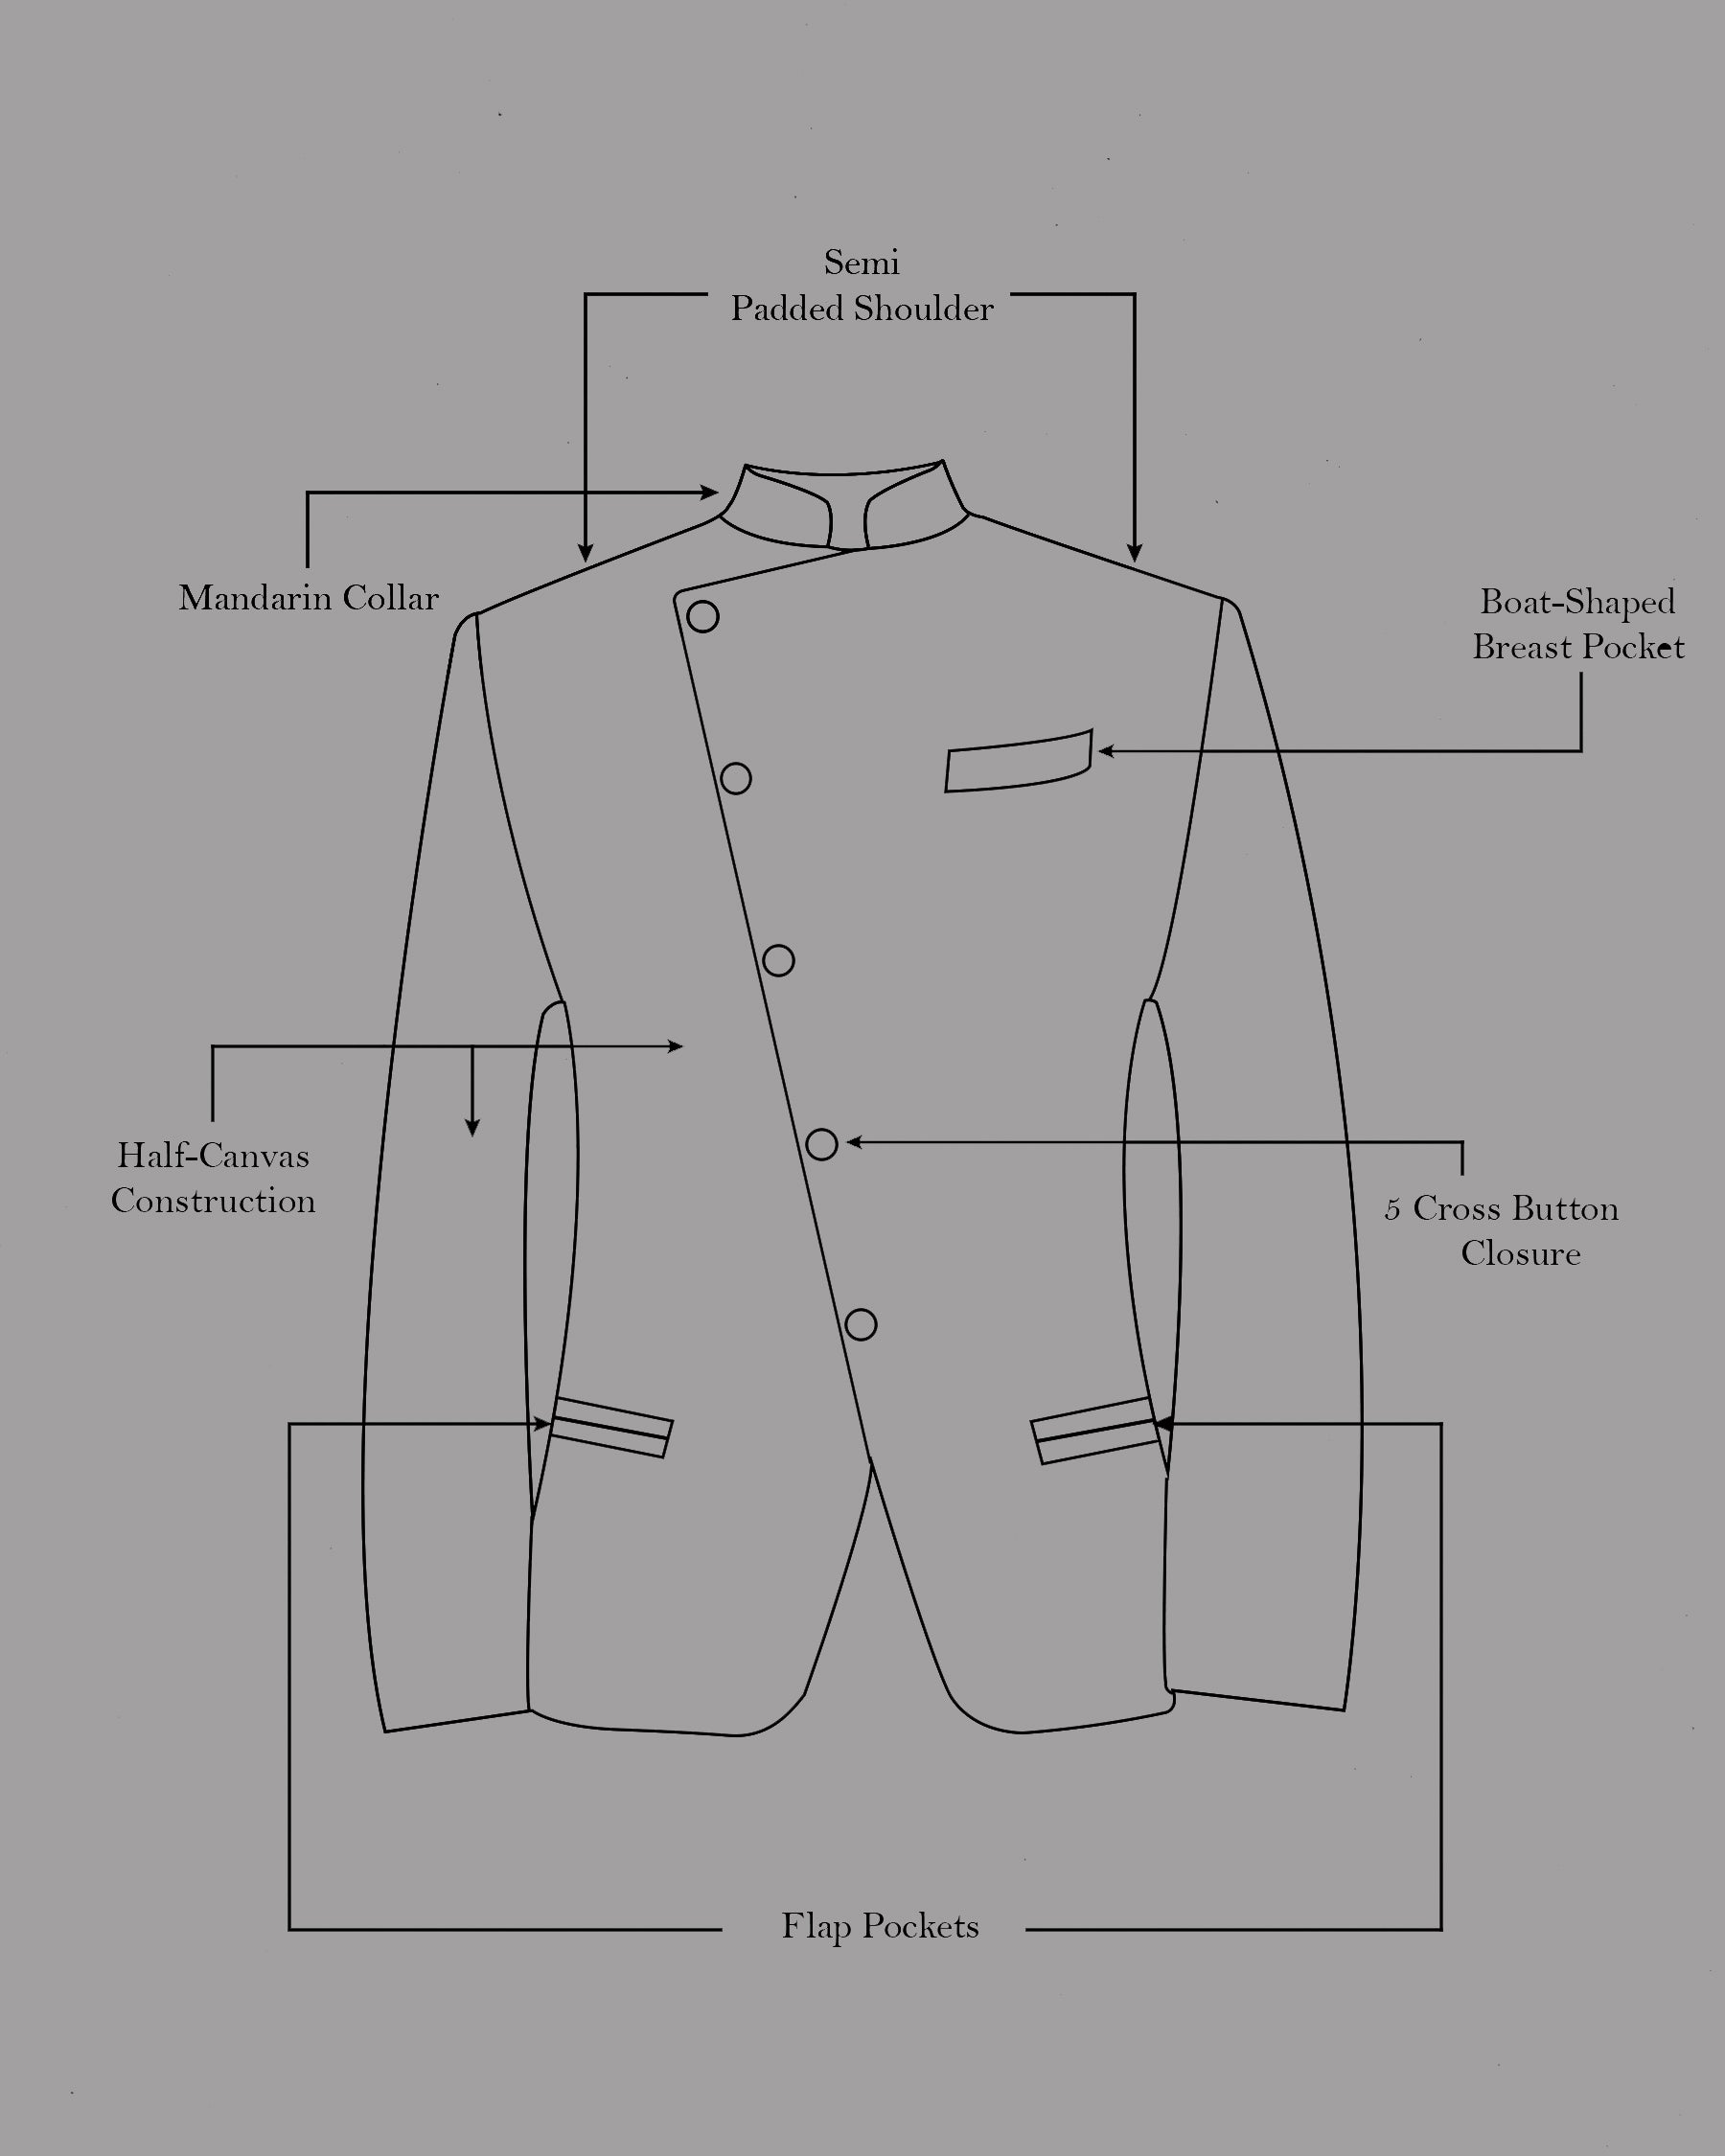 Midnight Moss Black Jacquard Leaves Patterned Cross Placket Bandhgala Designer Suit